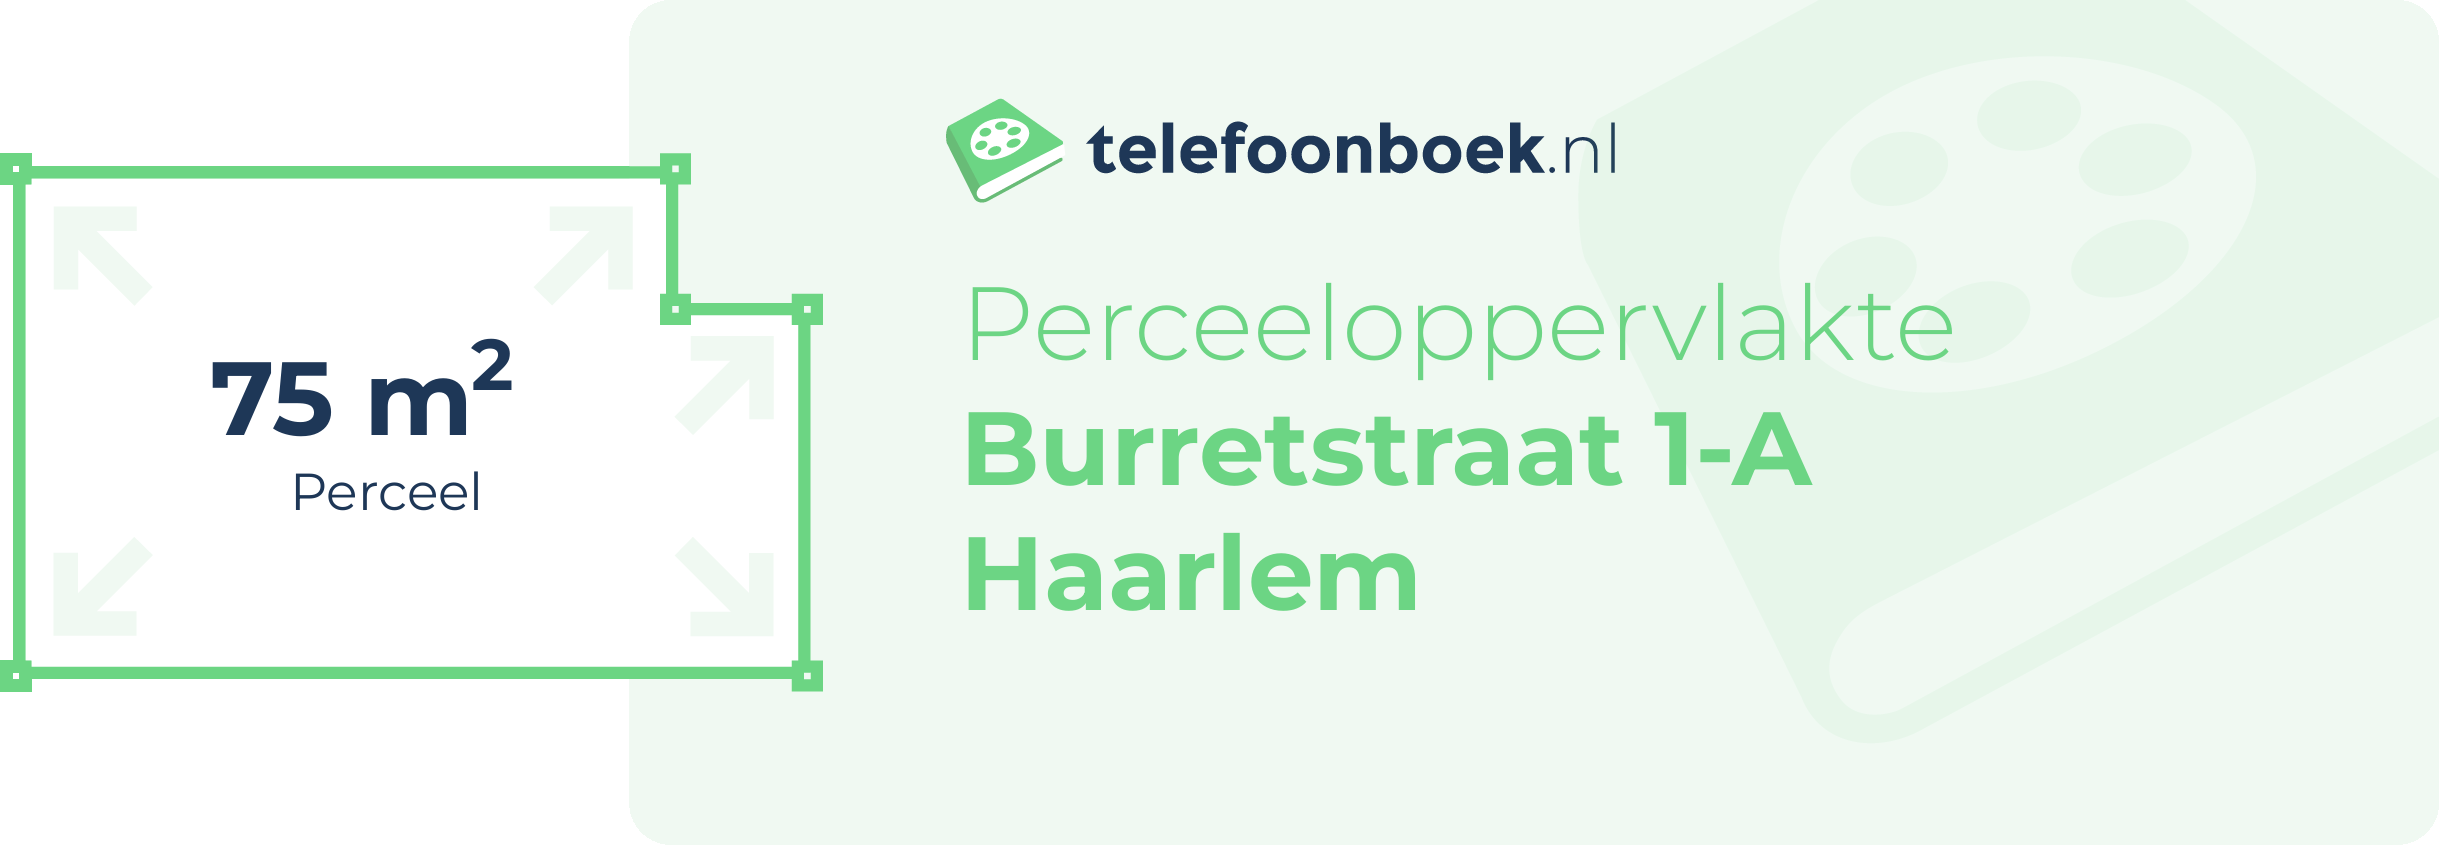 Perceeloppervlakte Burretstraat 1-A Haarlem